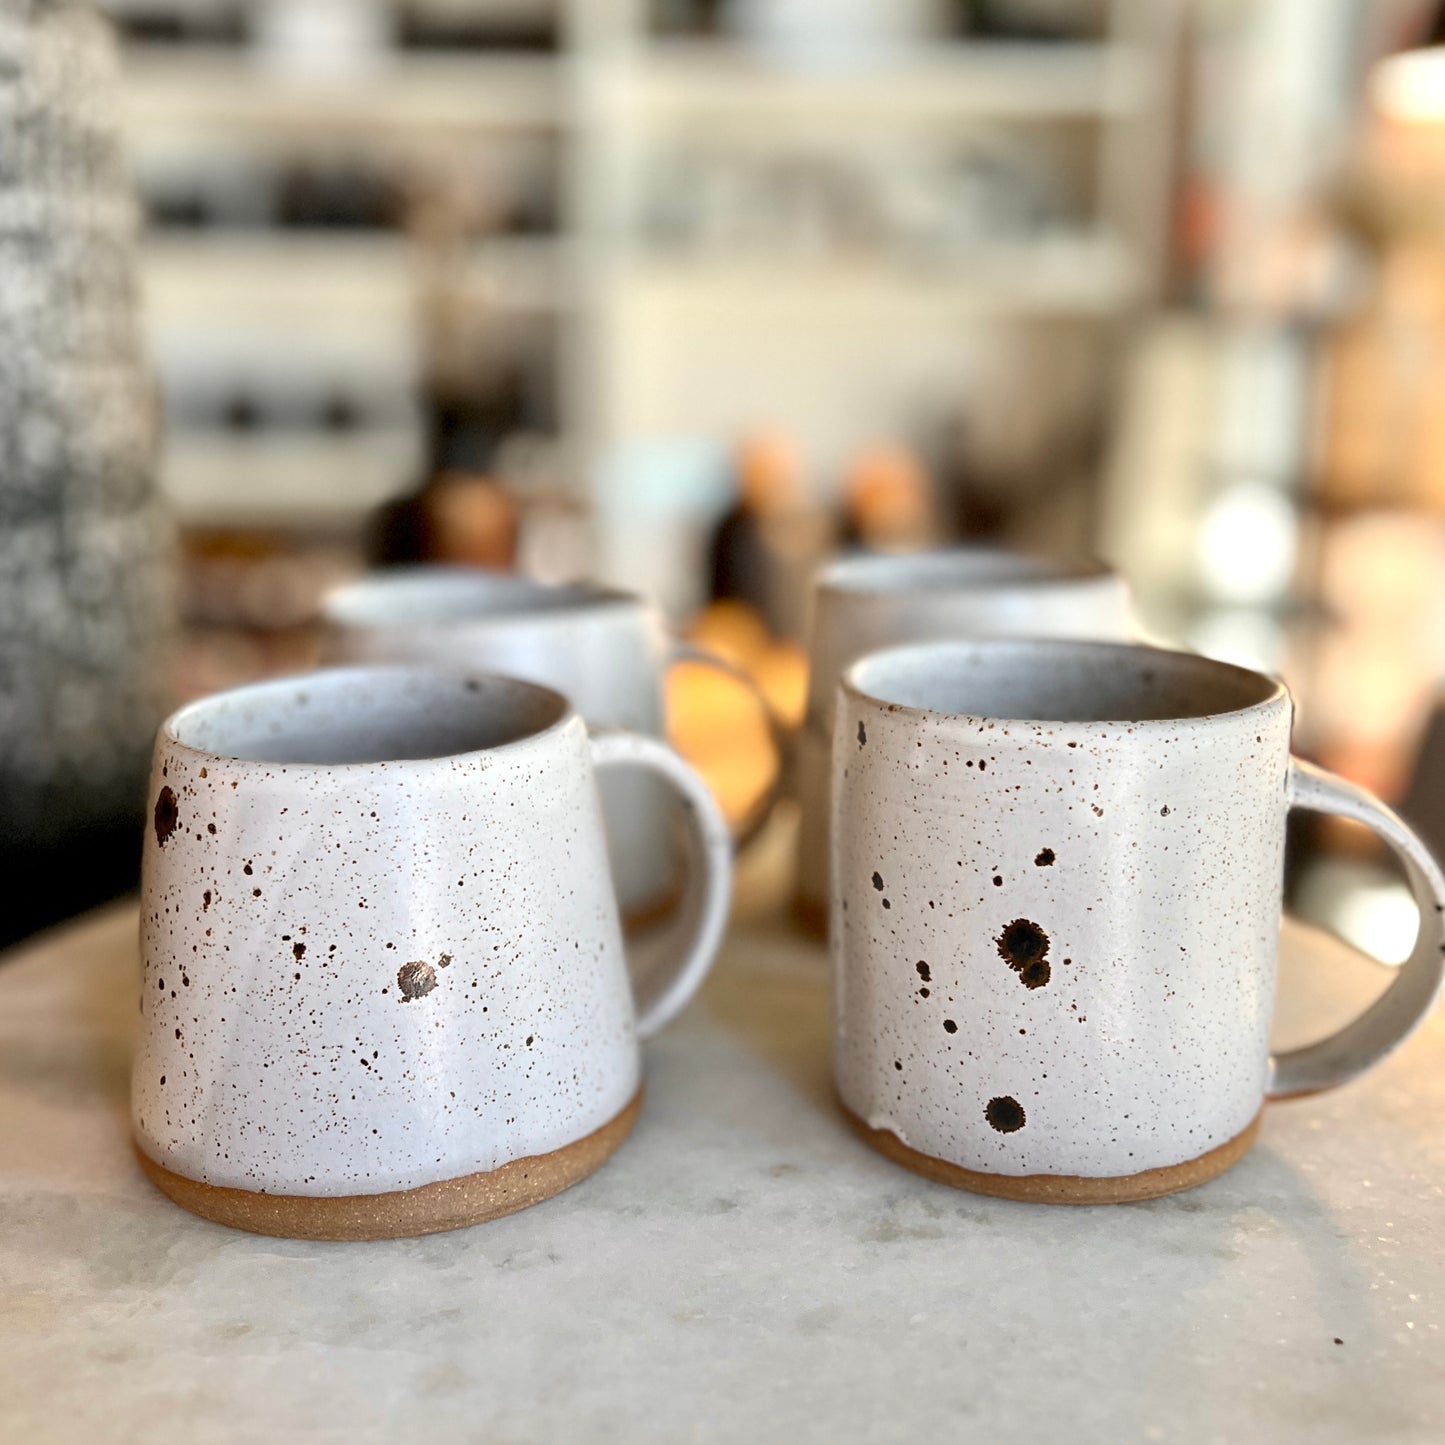 Speckled mugs